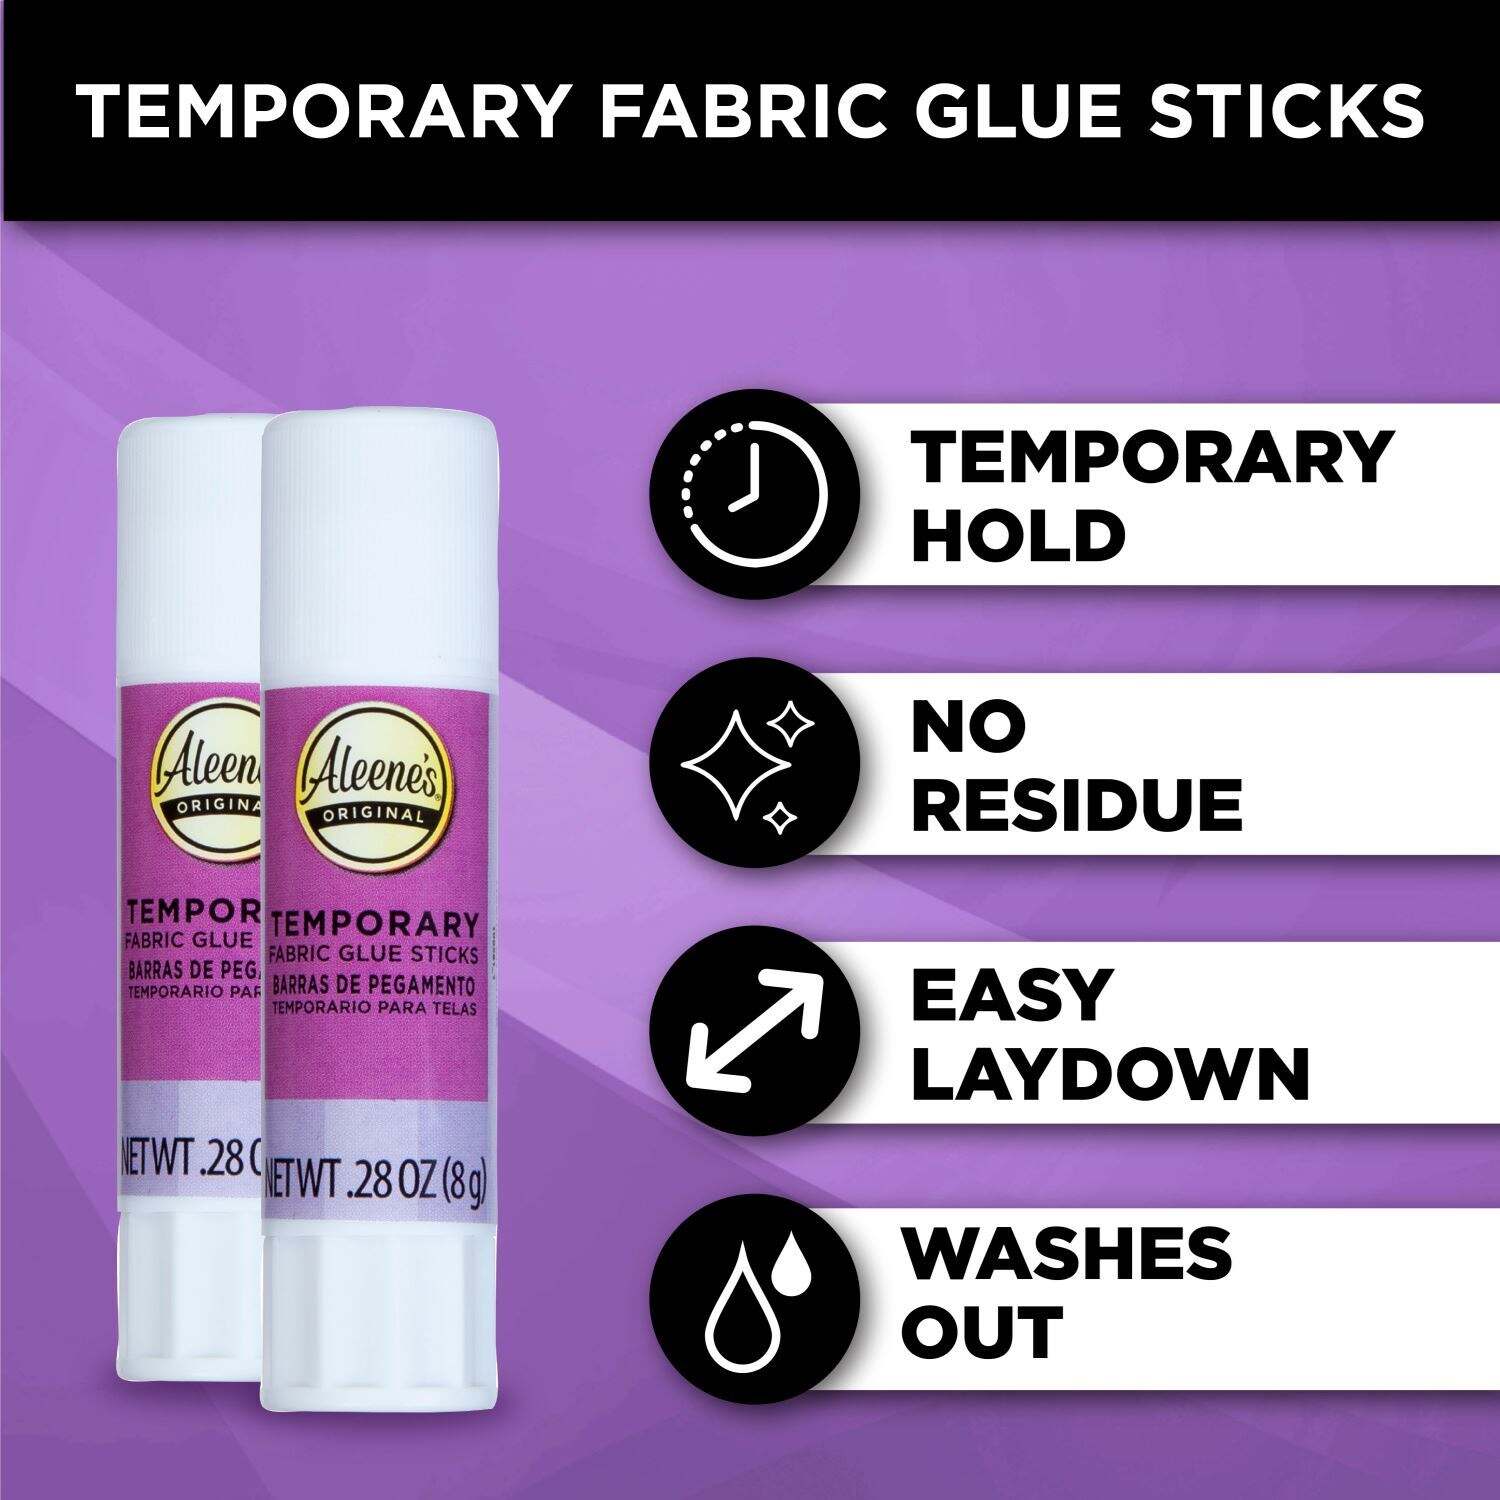 Aleene's No Sew Fabric Glue Temporary Fabric Adhesive for Basting and  Stitching 